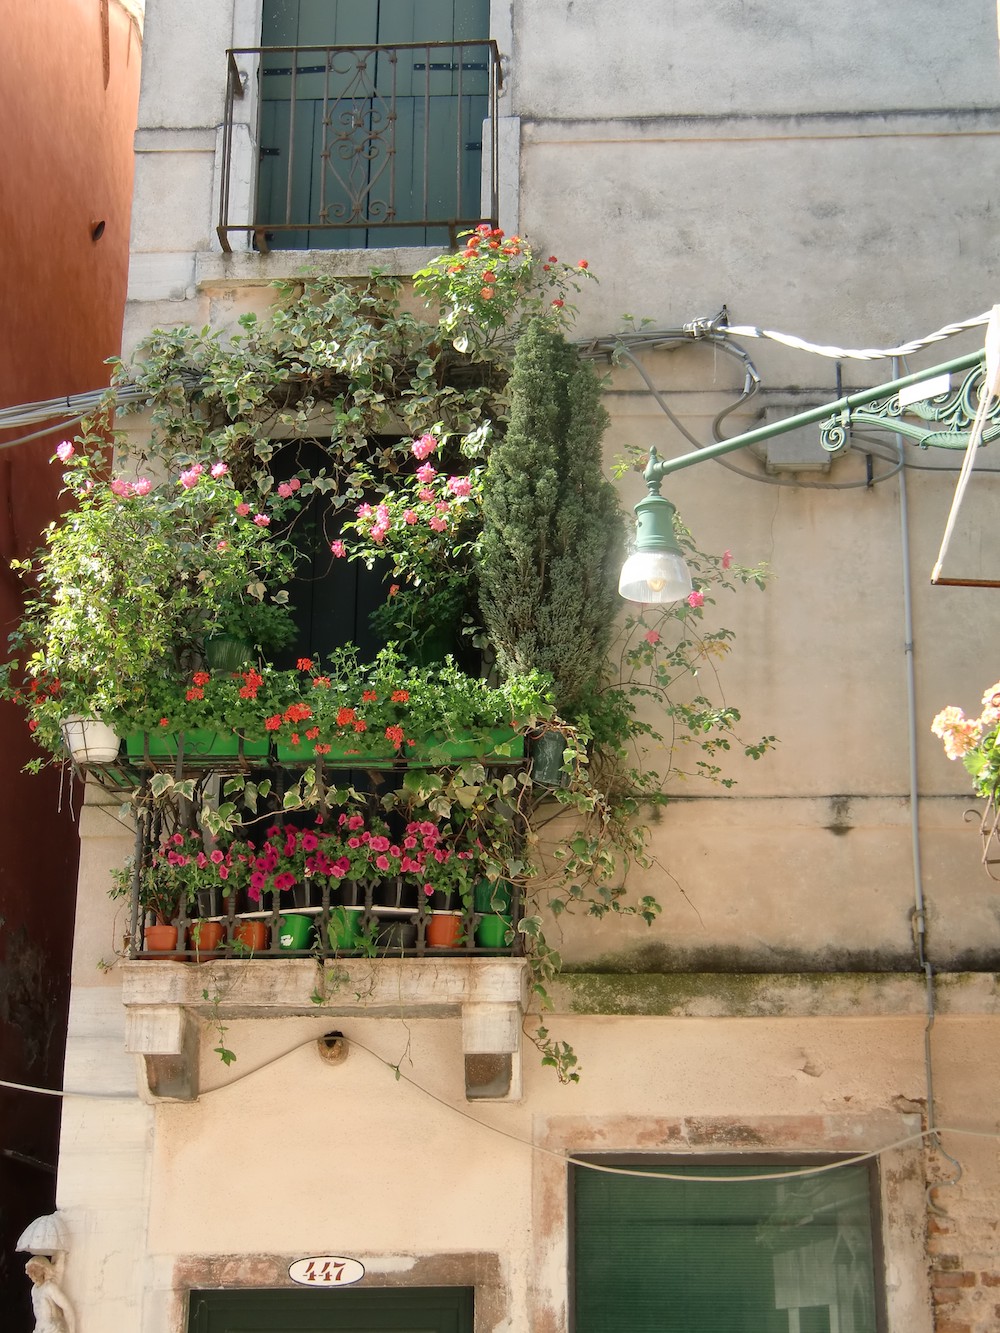 Venedig - Fenstergarten oder Gartenfenster?